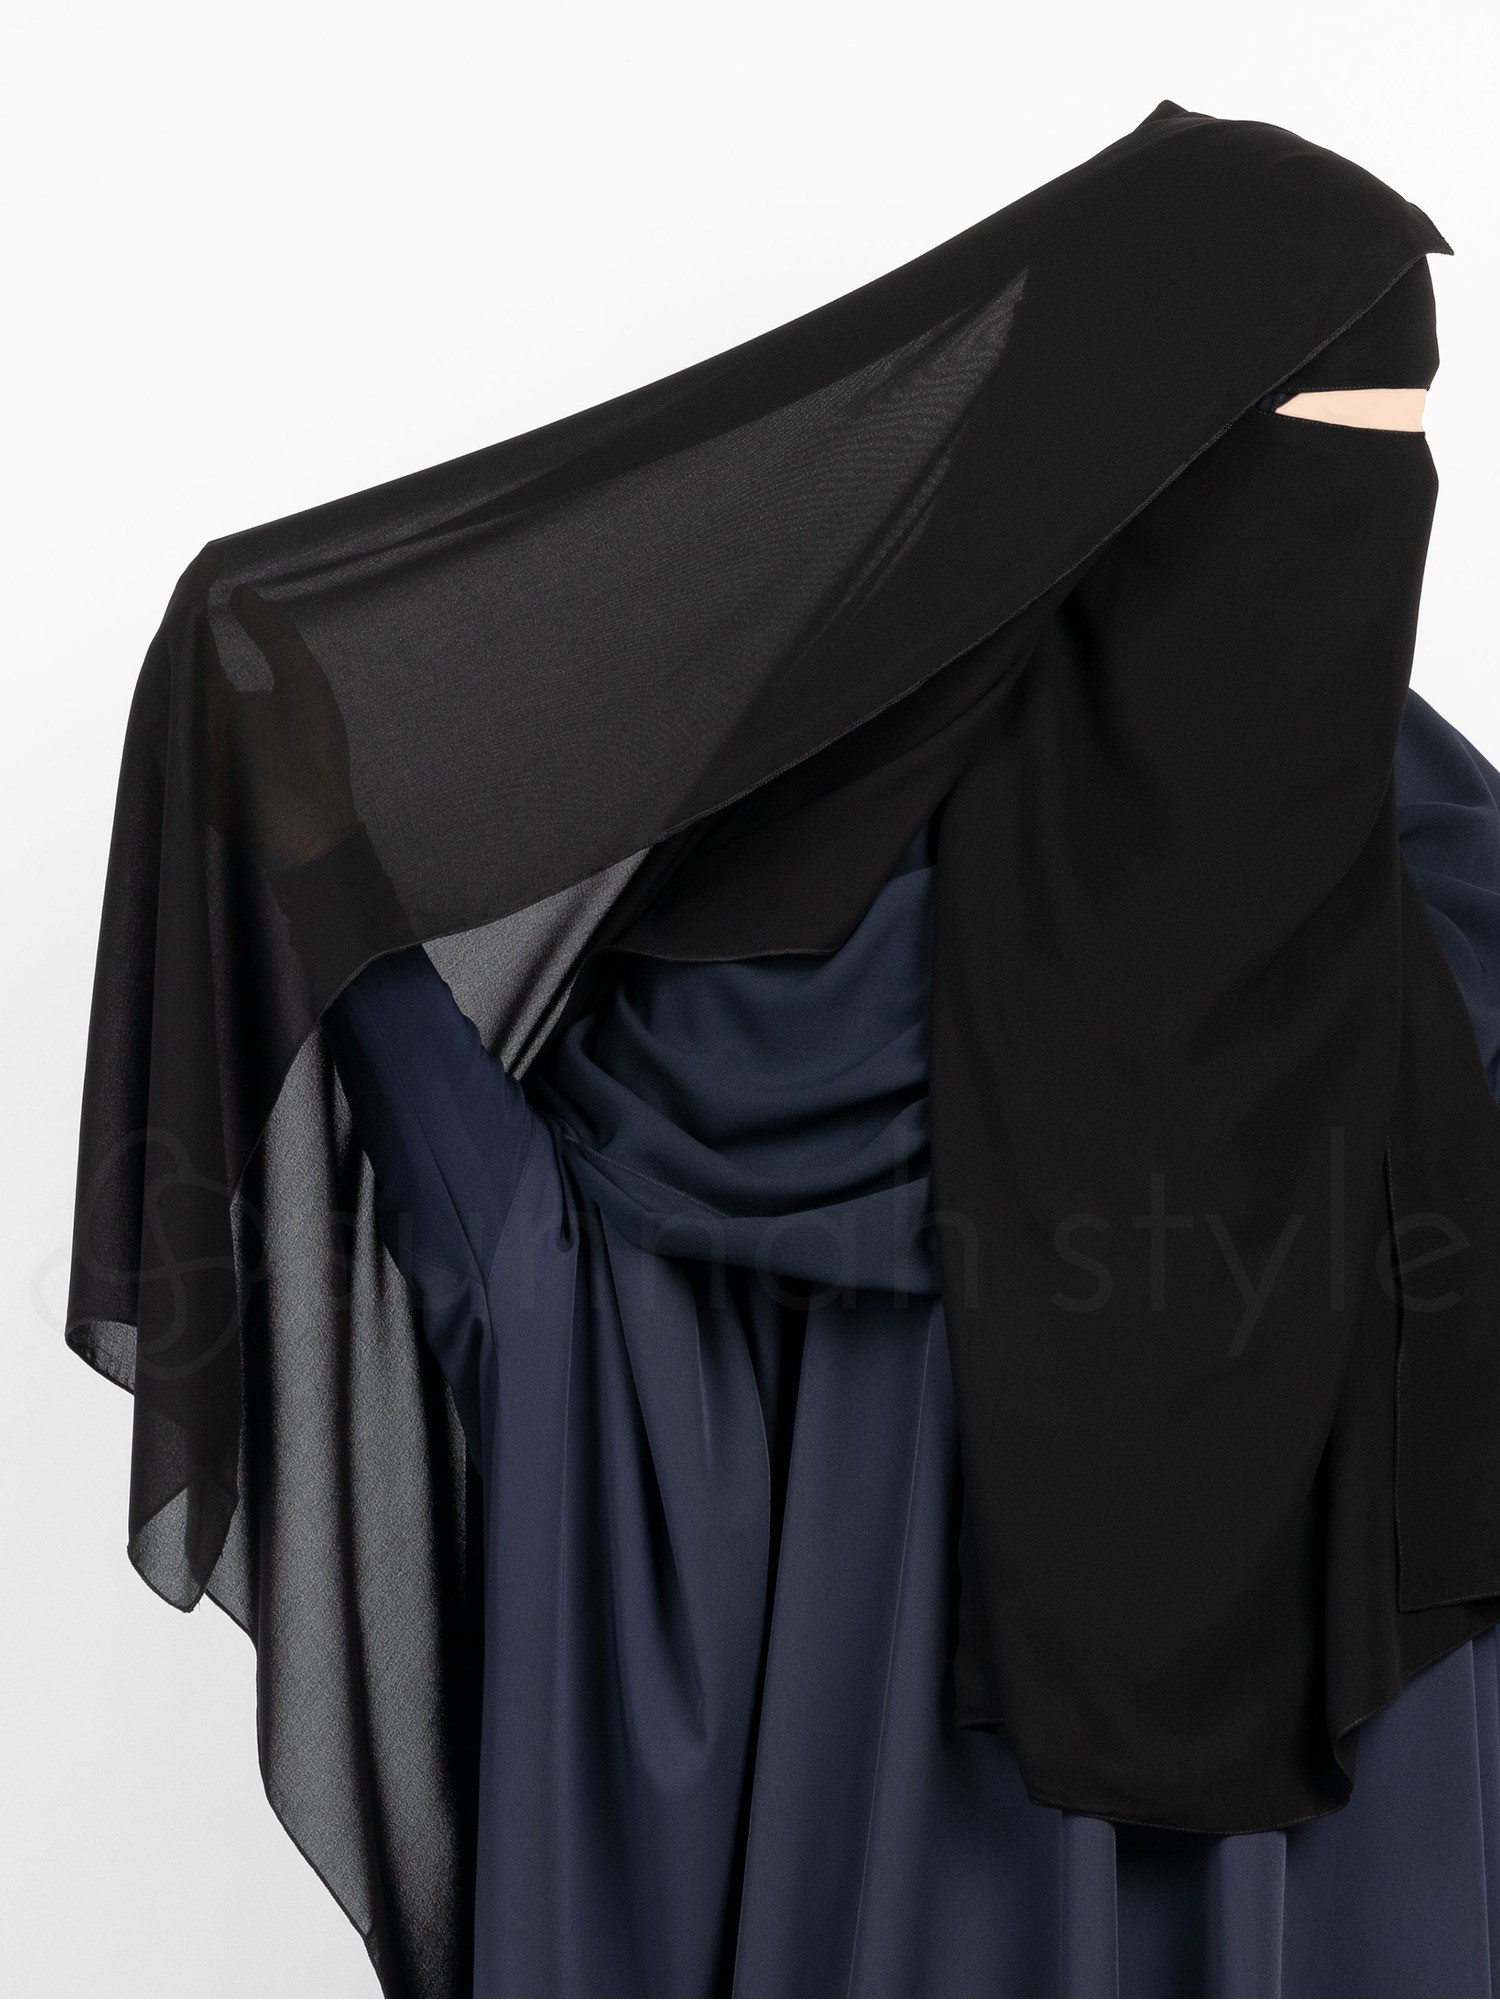 Niqabs